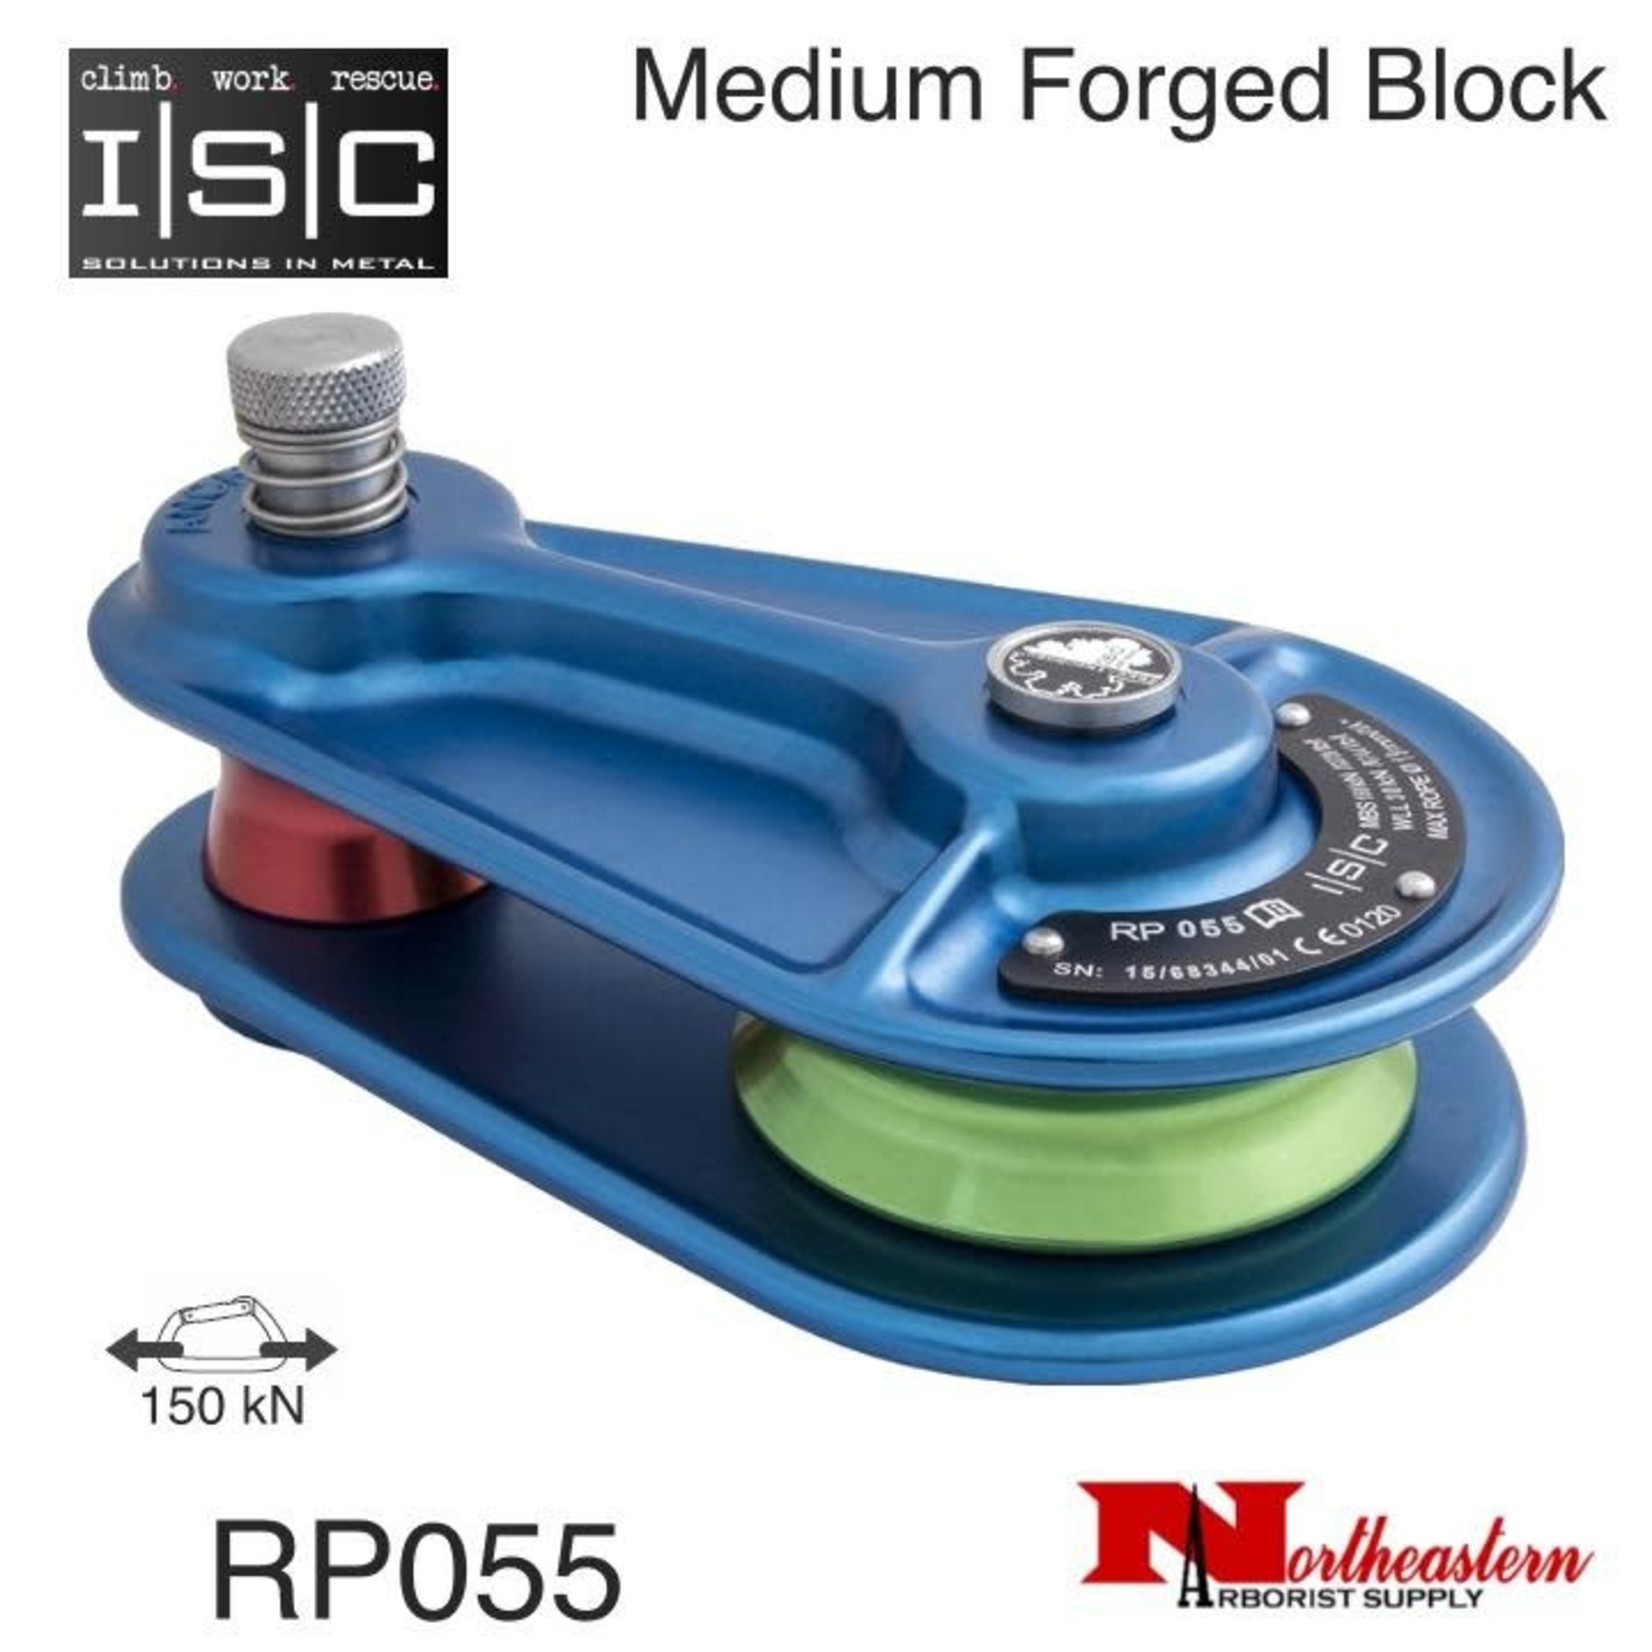 ISC Block, Medium Forged Aluminum For 3/4" Rope, Blue, Medium Green Sheave